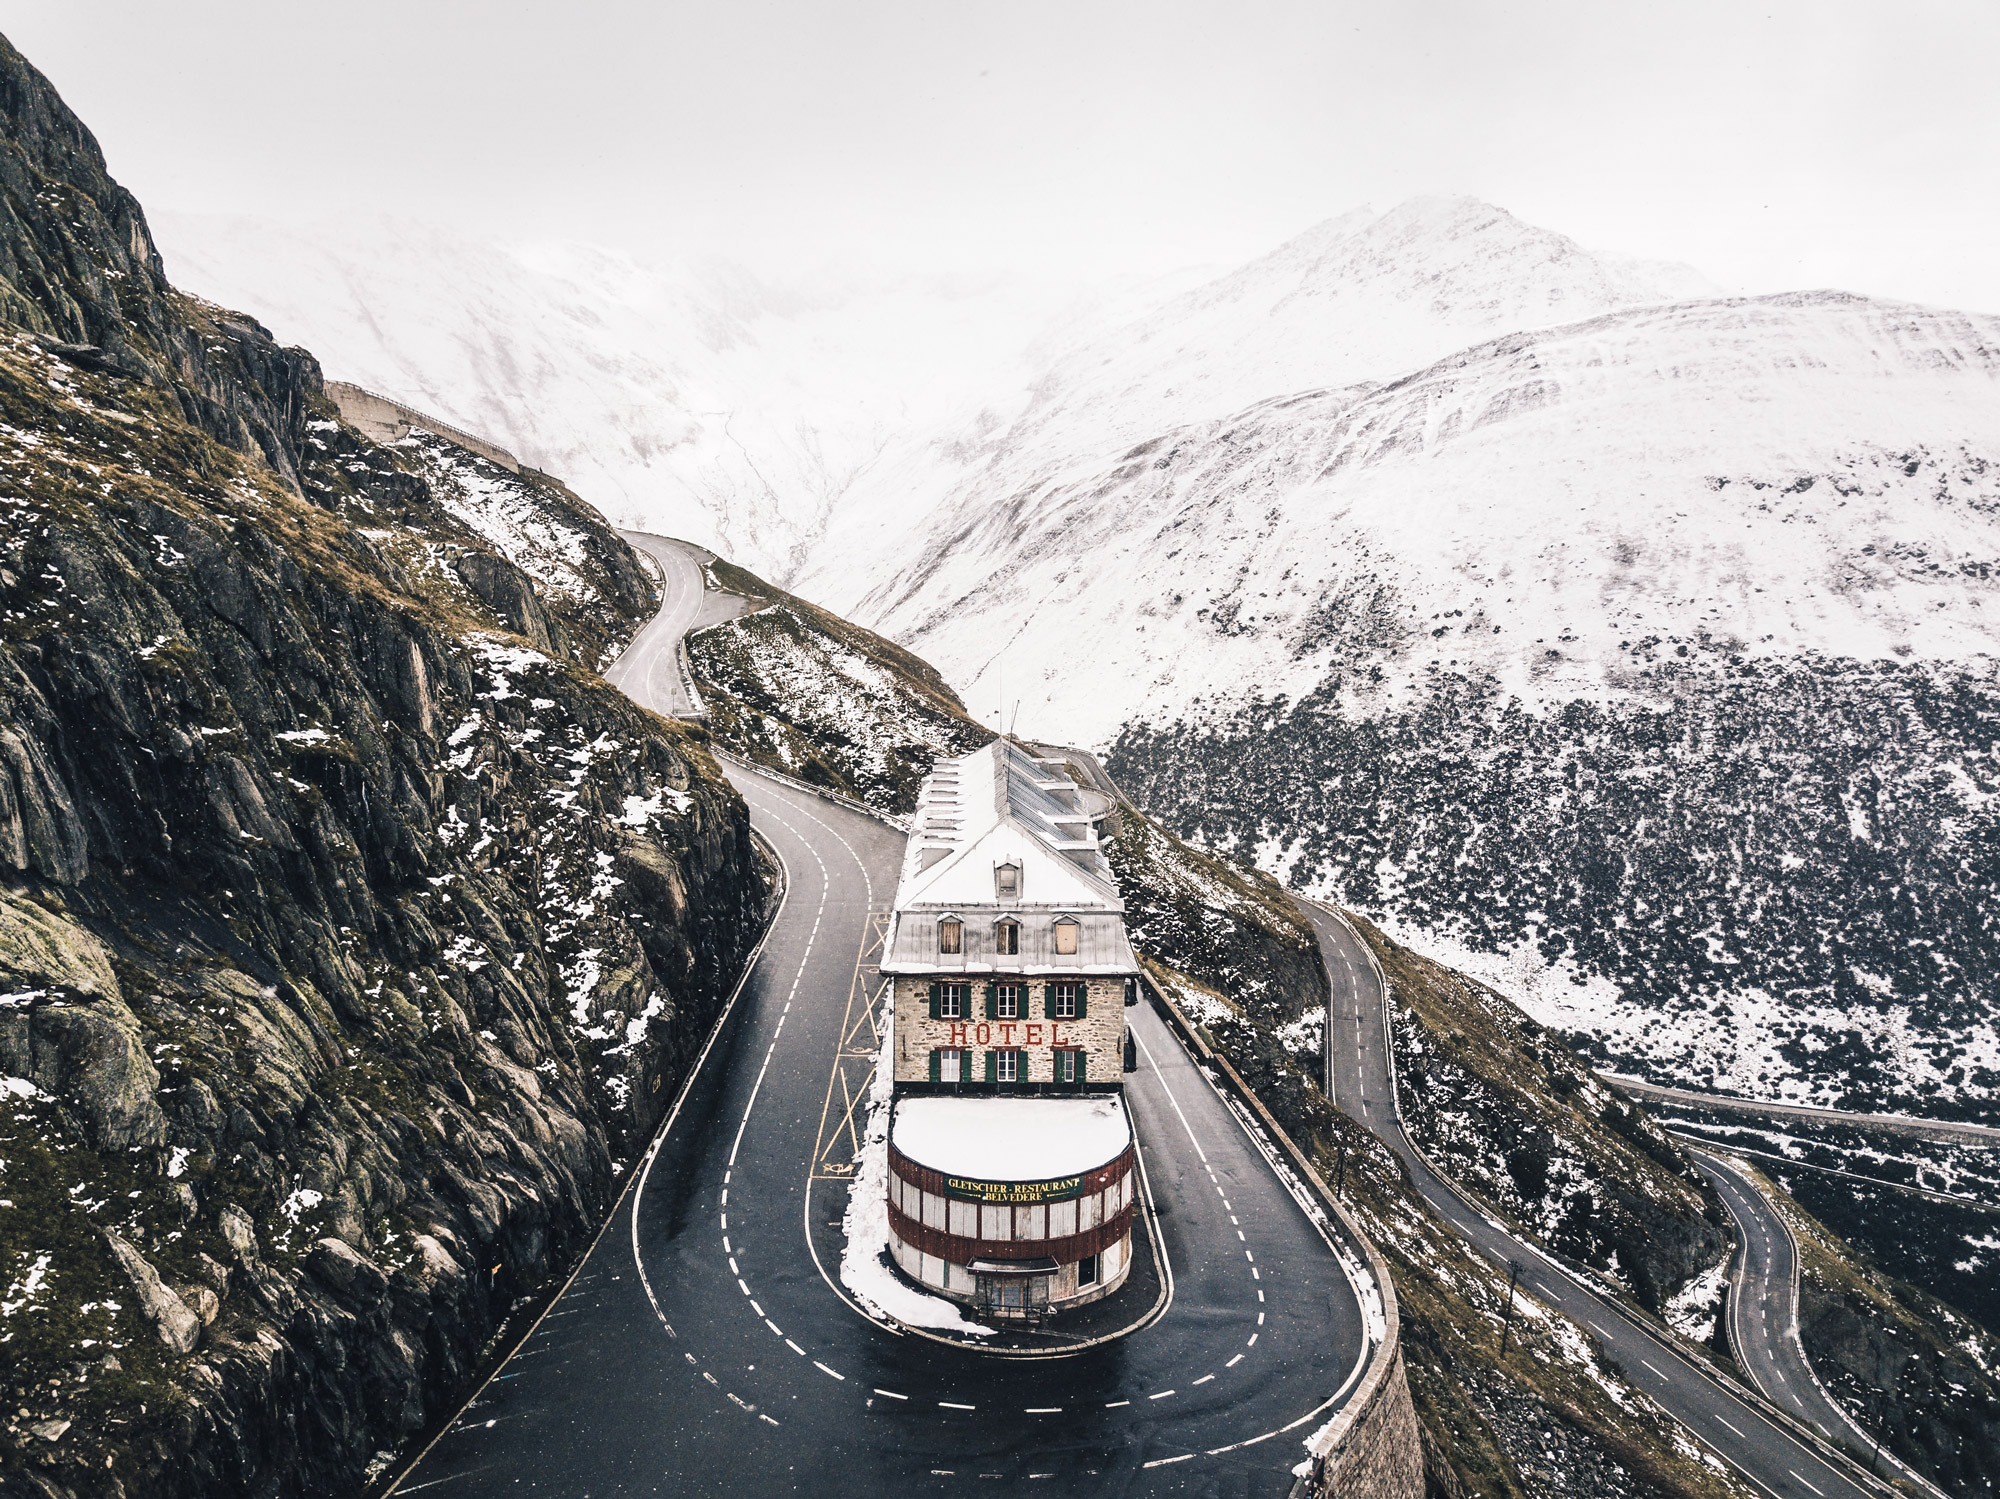 Hotel on hairpin bend at Furka Pass, Switzerland